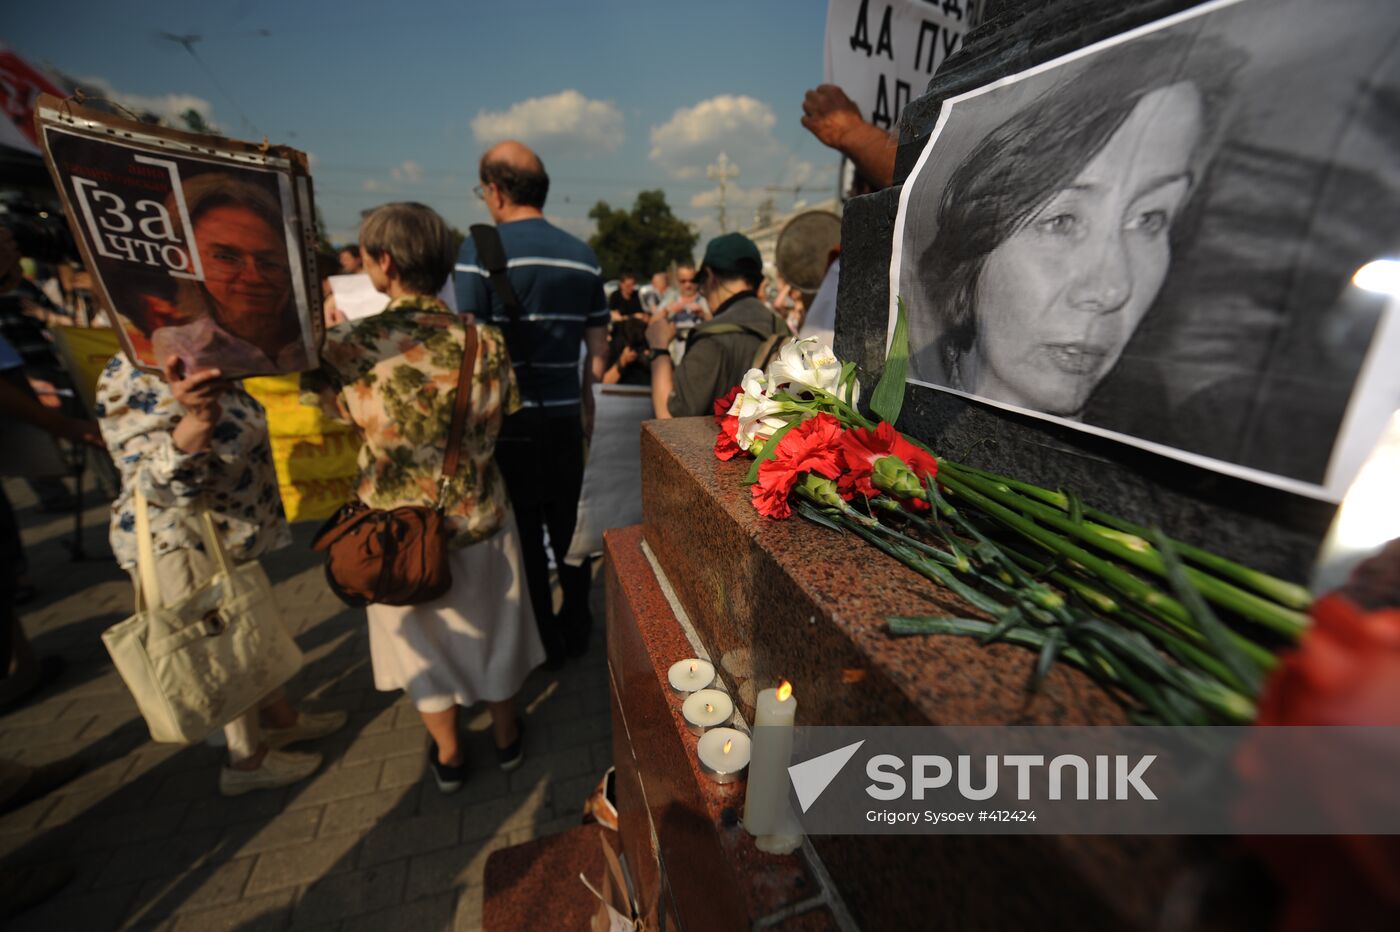 Rally in memory of murdered human rights activist Estemirova